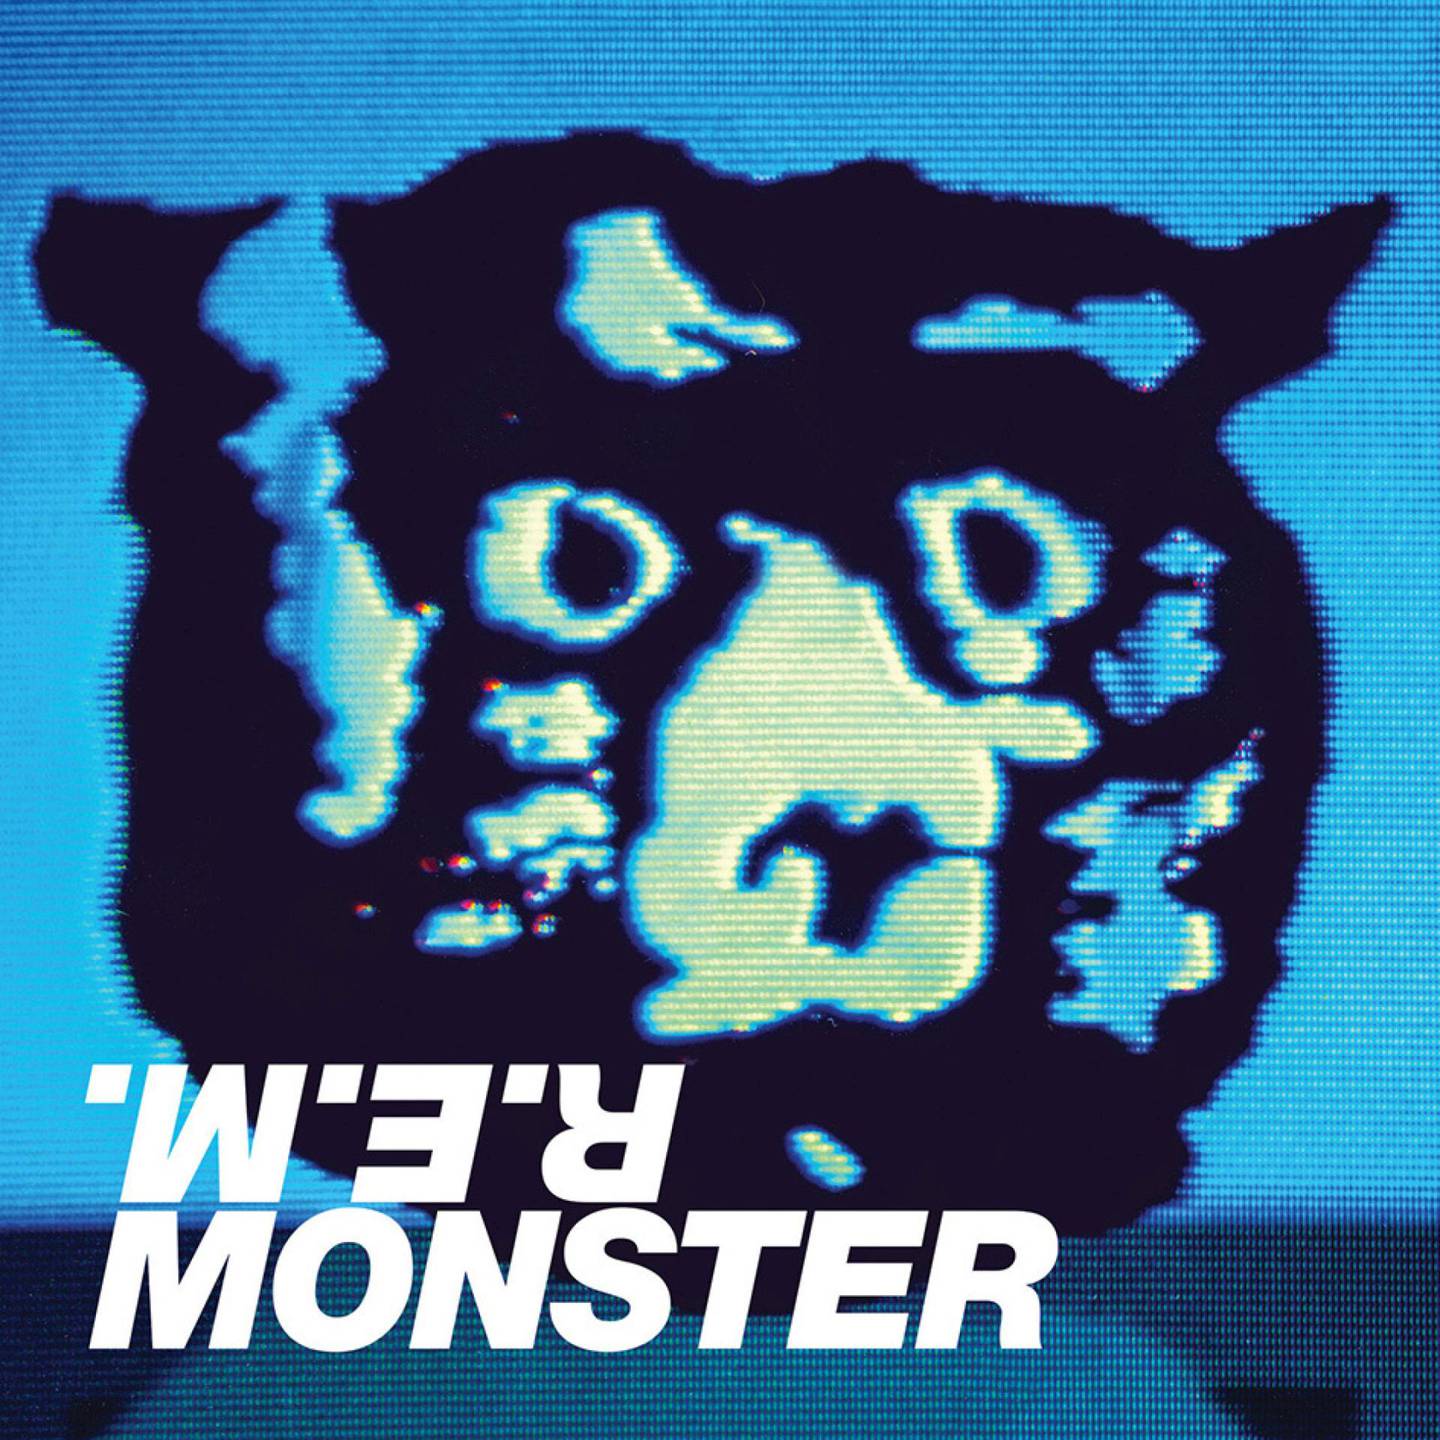 R.E.M.,KUL Anm Musikk B:Monster – 25th Anniversary Edition»
KUL Anm Musikk C:Warner
NYH Henvisning: